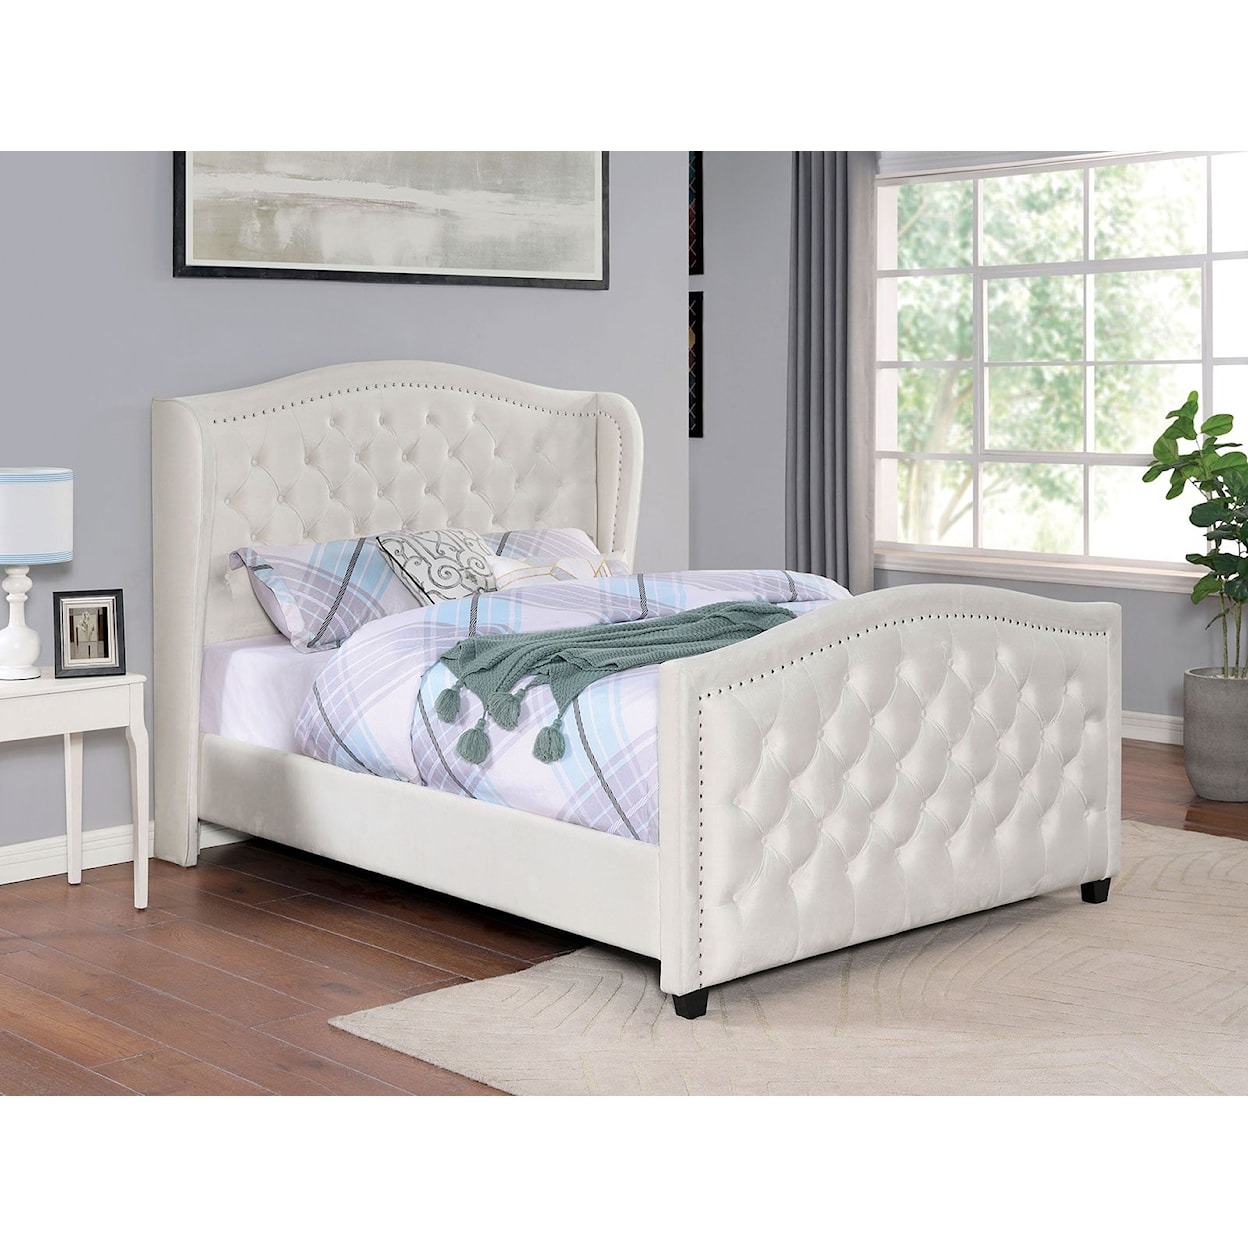 Furniture of America Kerran Upholstered California King Bed